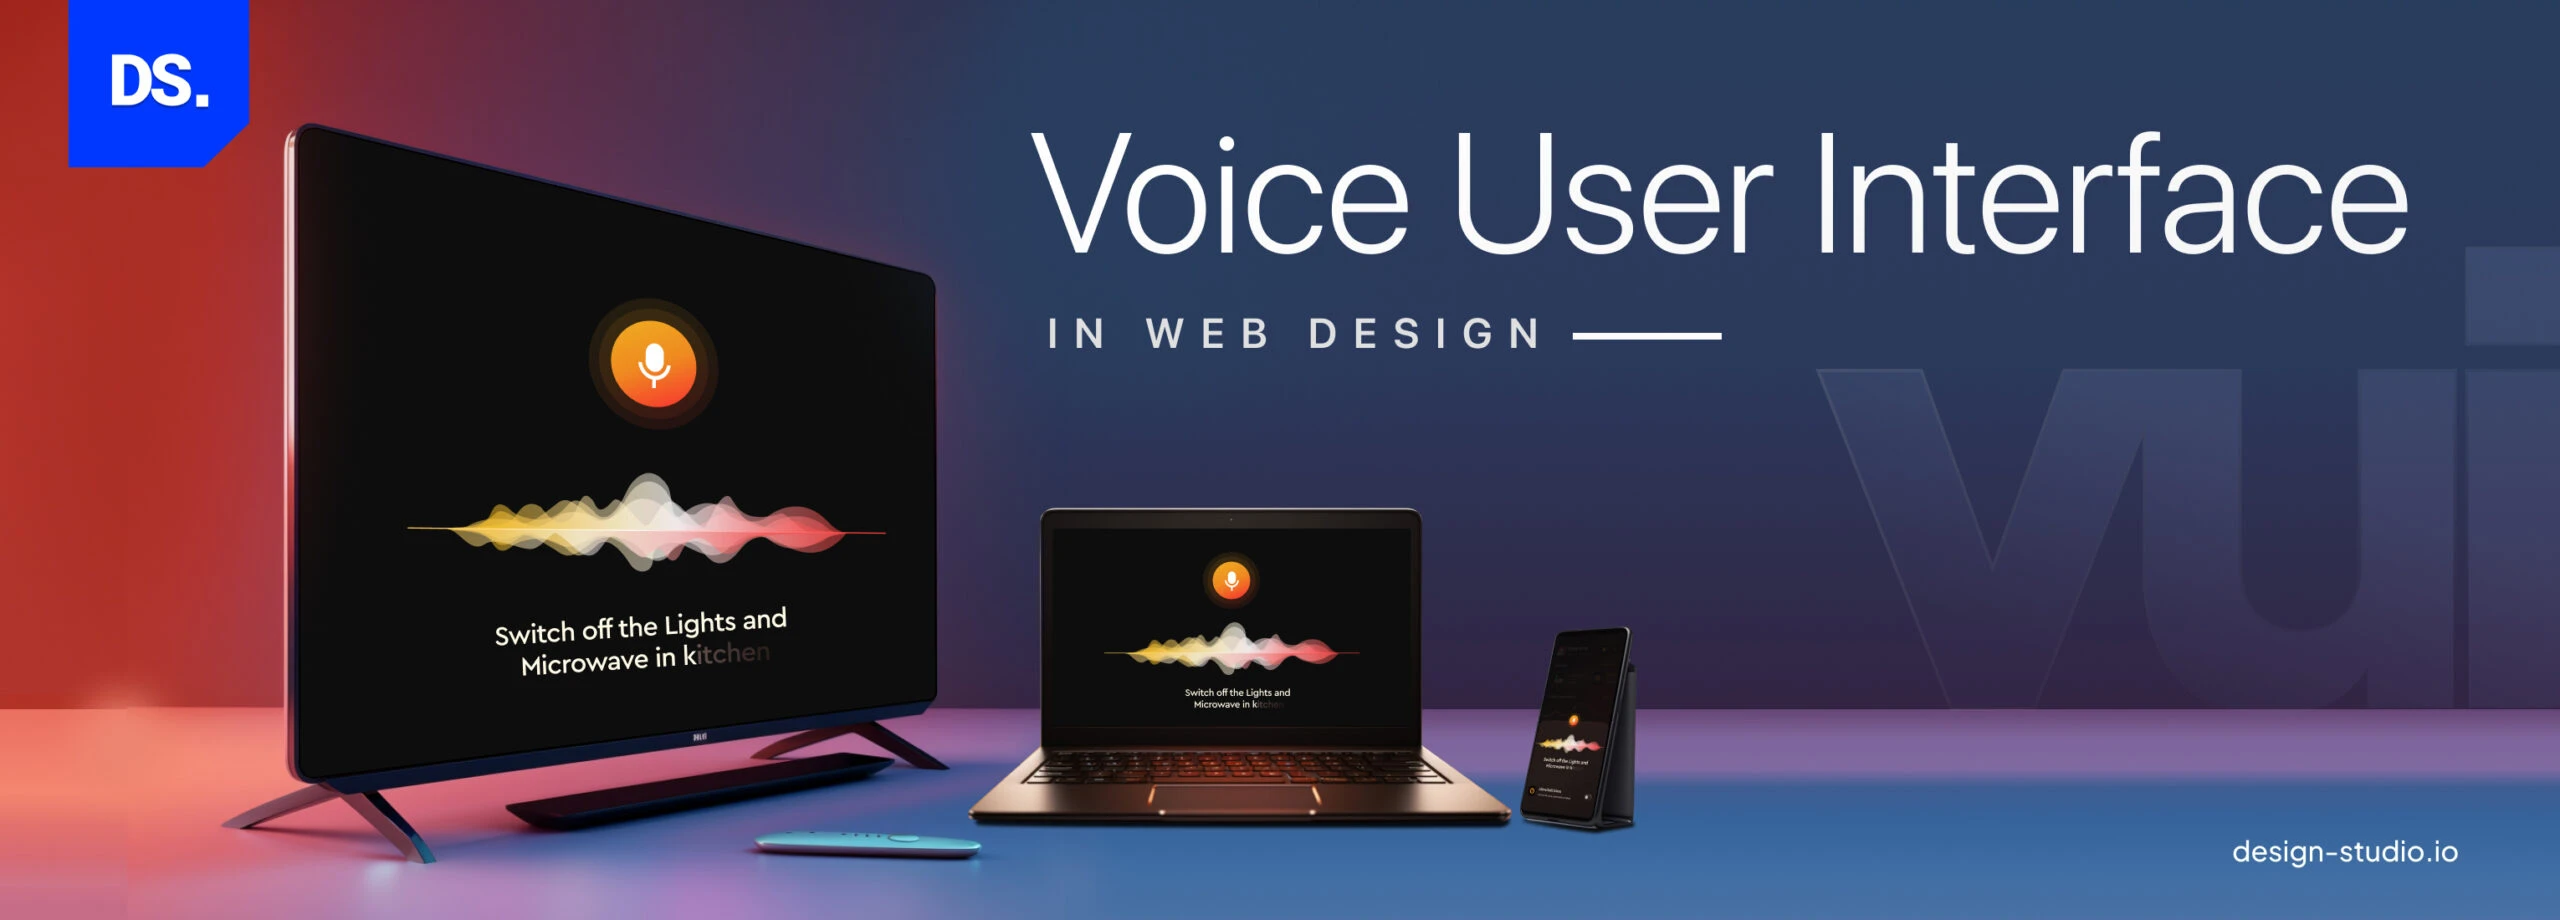 voice user interface design